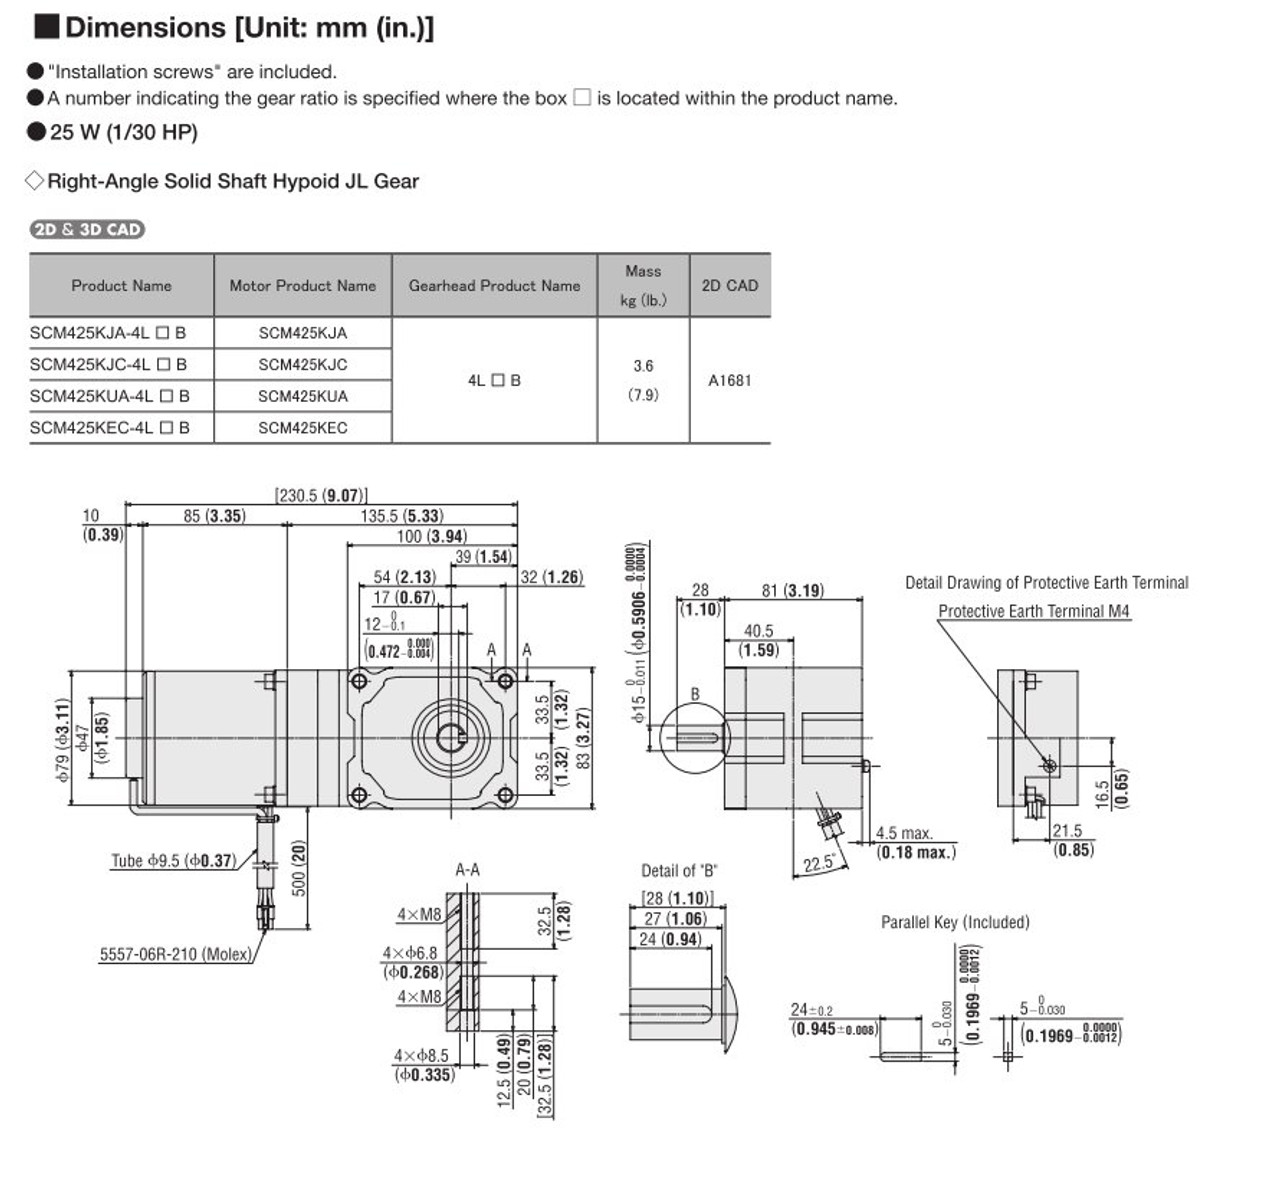 SCM425KUA-4L10B - Dimensions